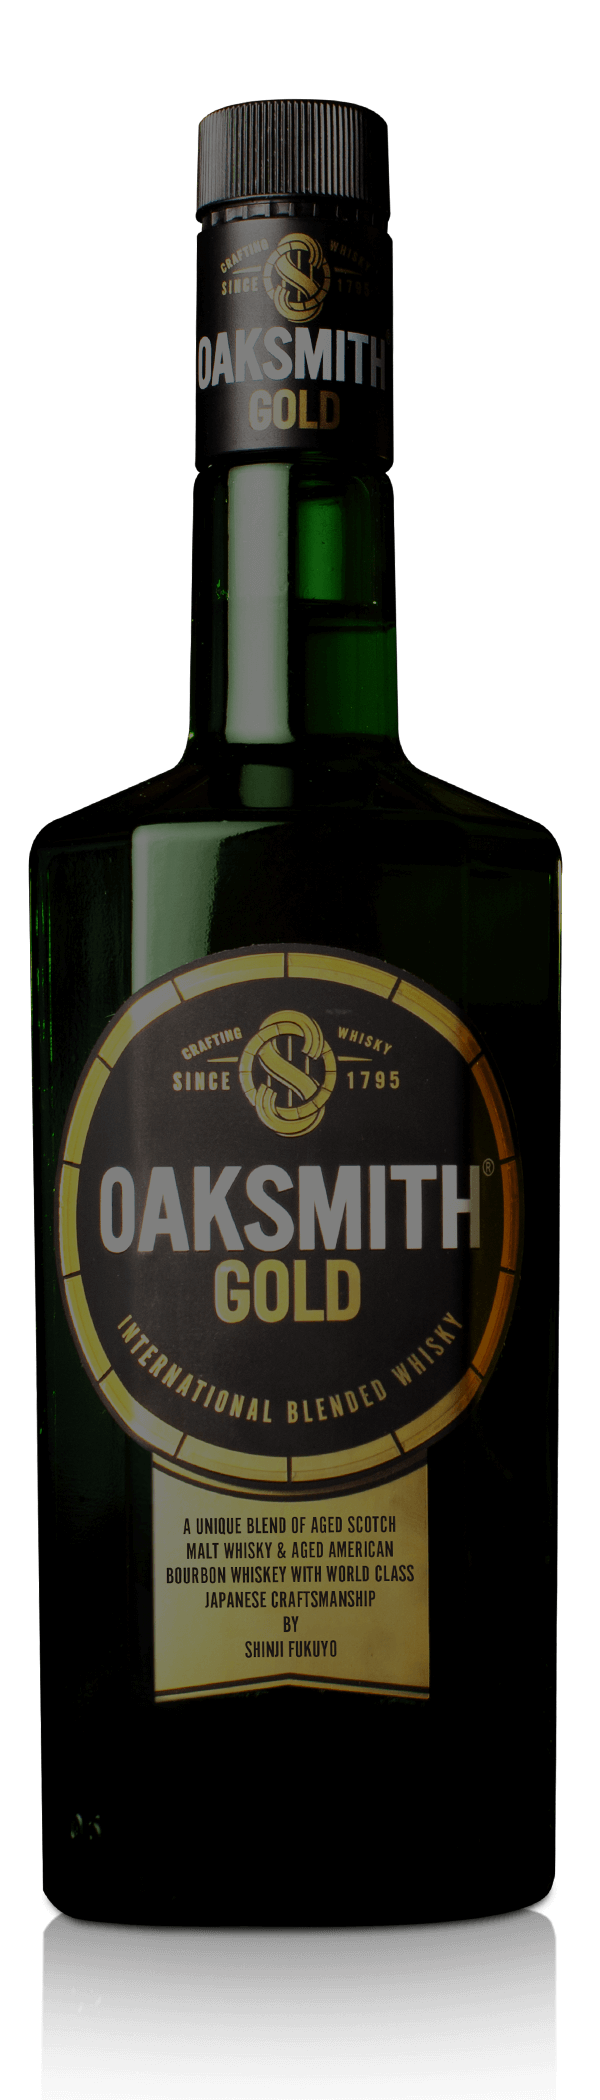 Oaksmith Gold International Blended Whisky. By Shinji Fukuyo